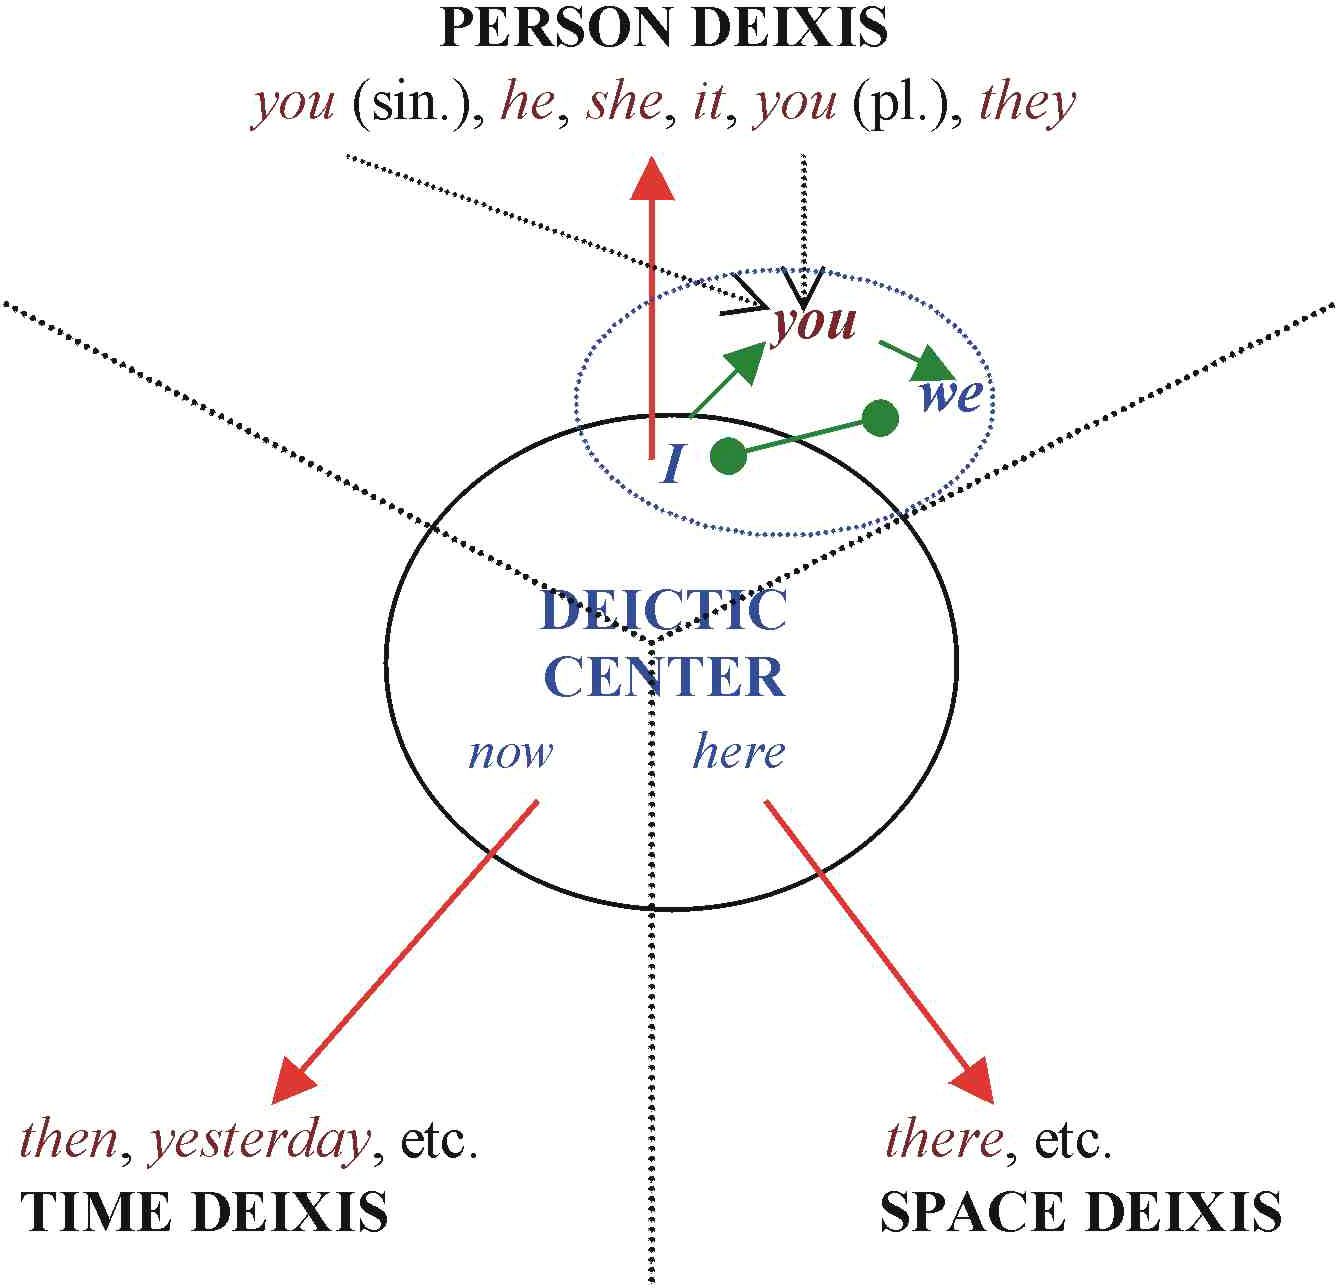 Fig2: The deictic center